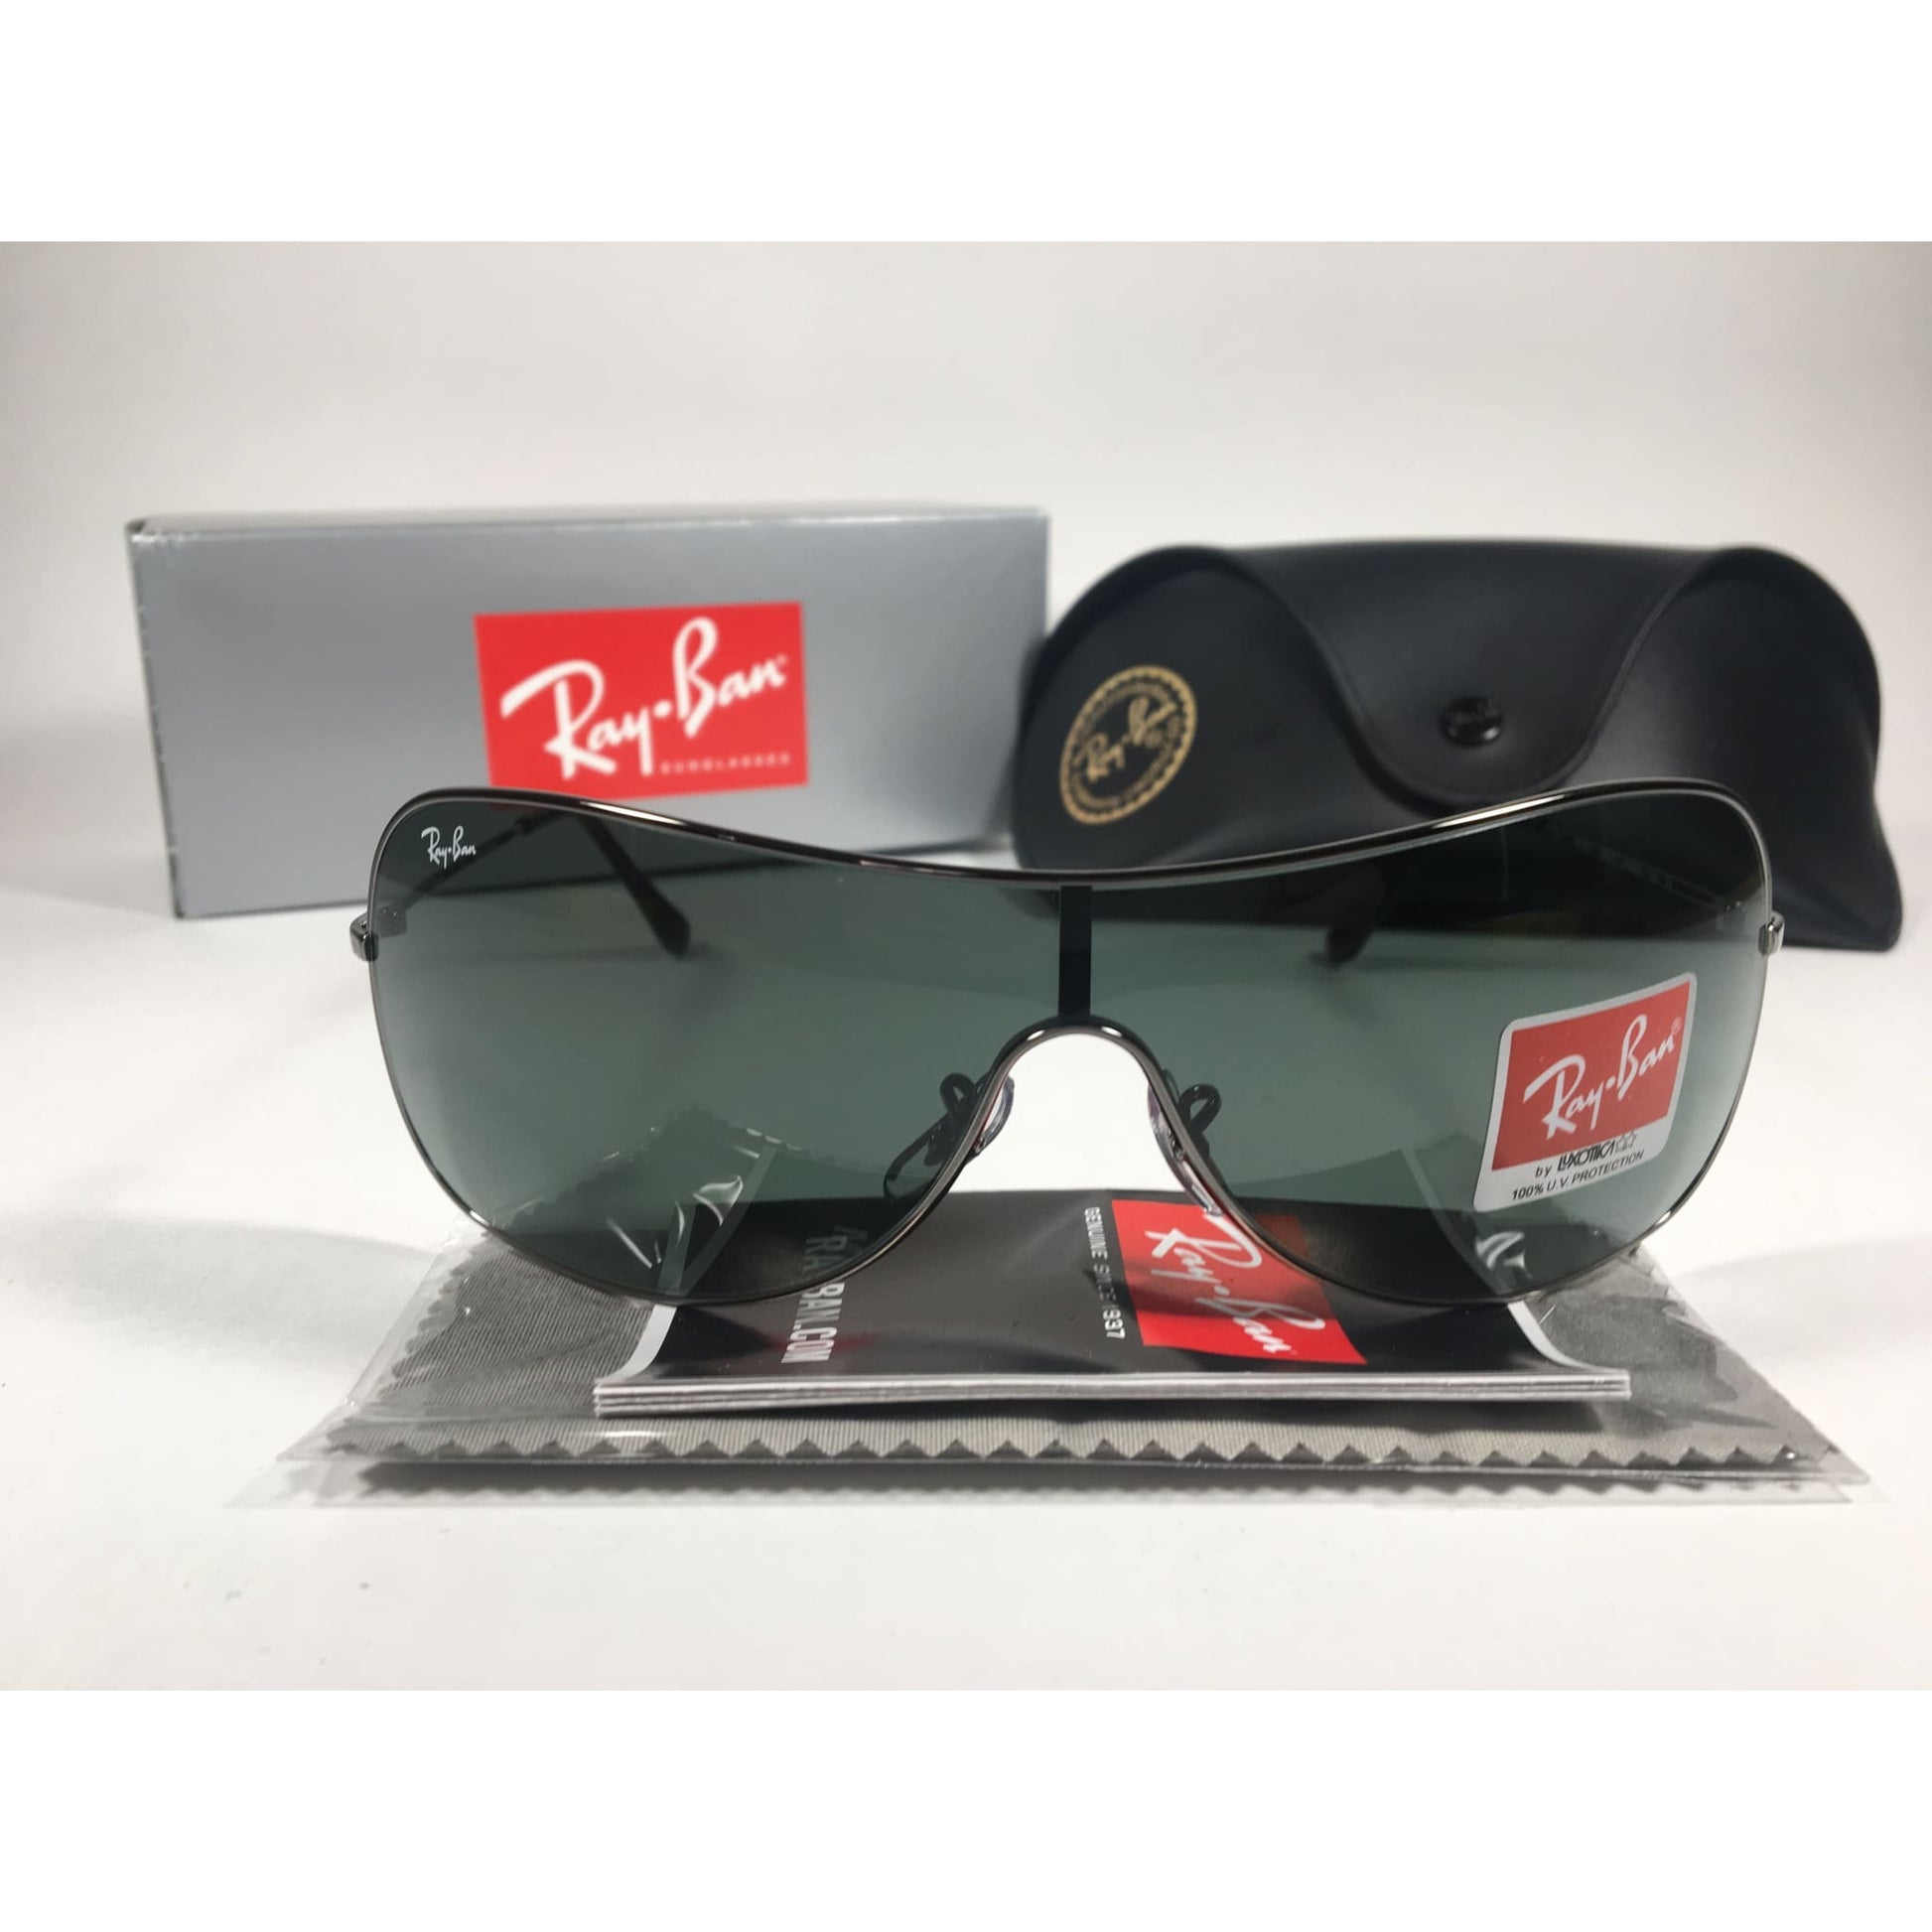 Ray-Ban Highstreet Shield Sunglasses Gunmetal Frame Green Lens RB3211 004/71 - Sunglasses